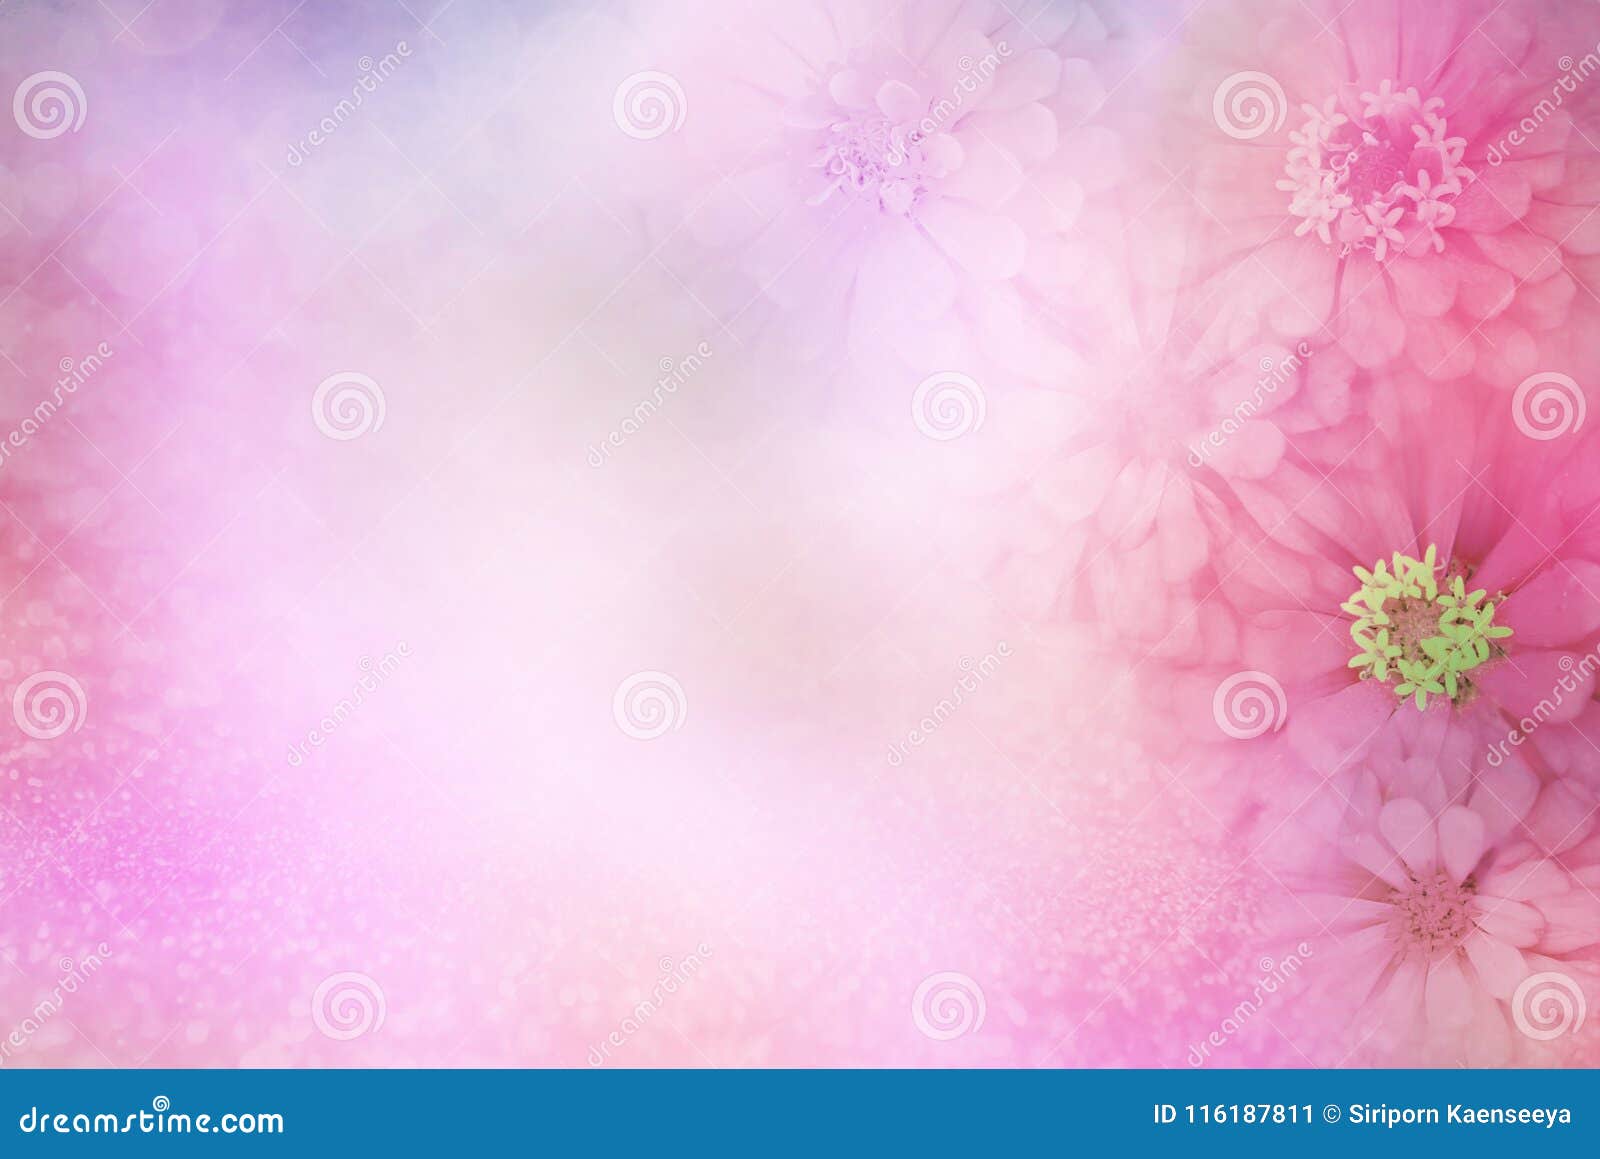 Sweet Pink Flower Border On Soft Glitter Background For ...